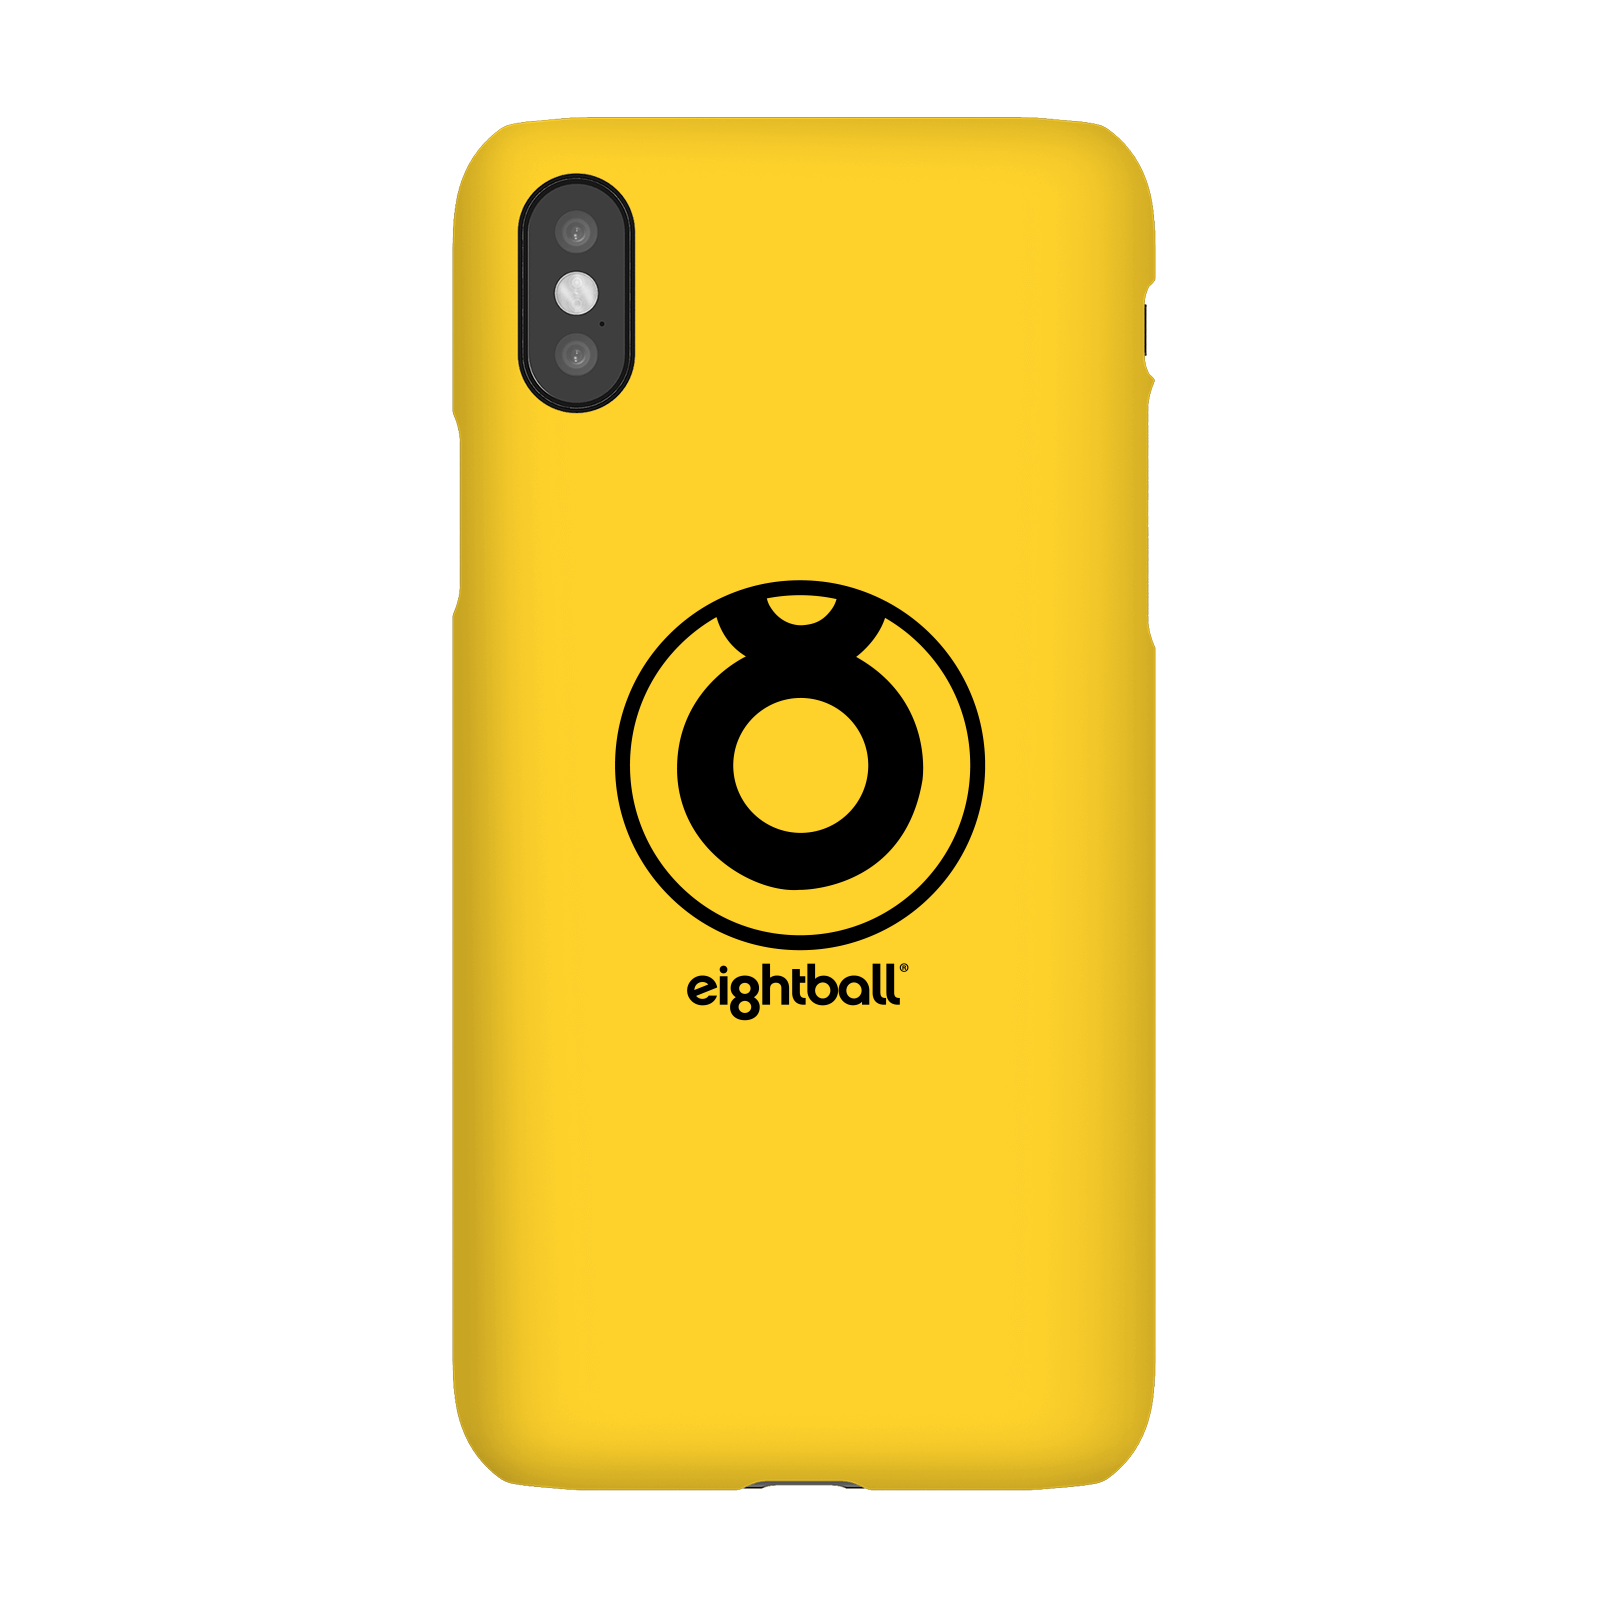 Funda Móvil Ei8htball Large Circle Logo para iPhone y Android - iPhone X - Carcasa rígida - Brillante